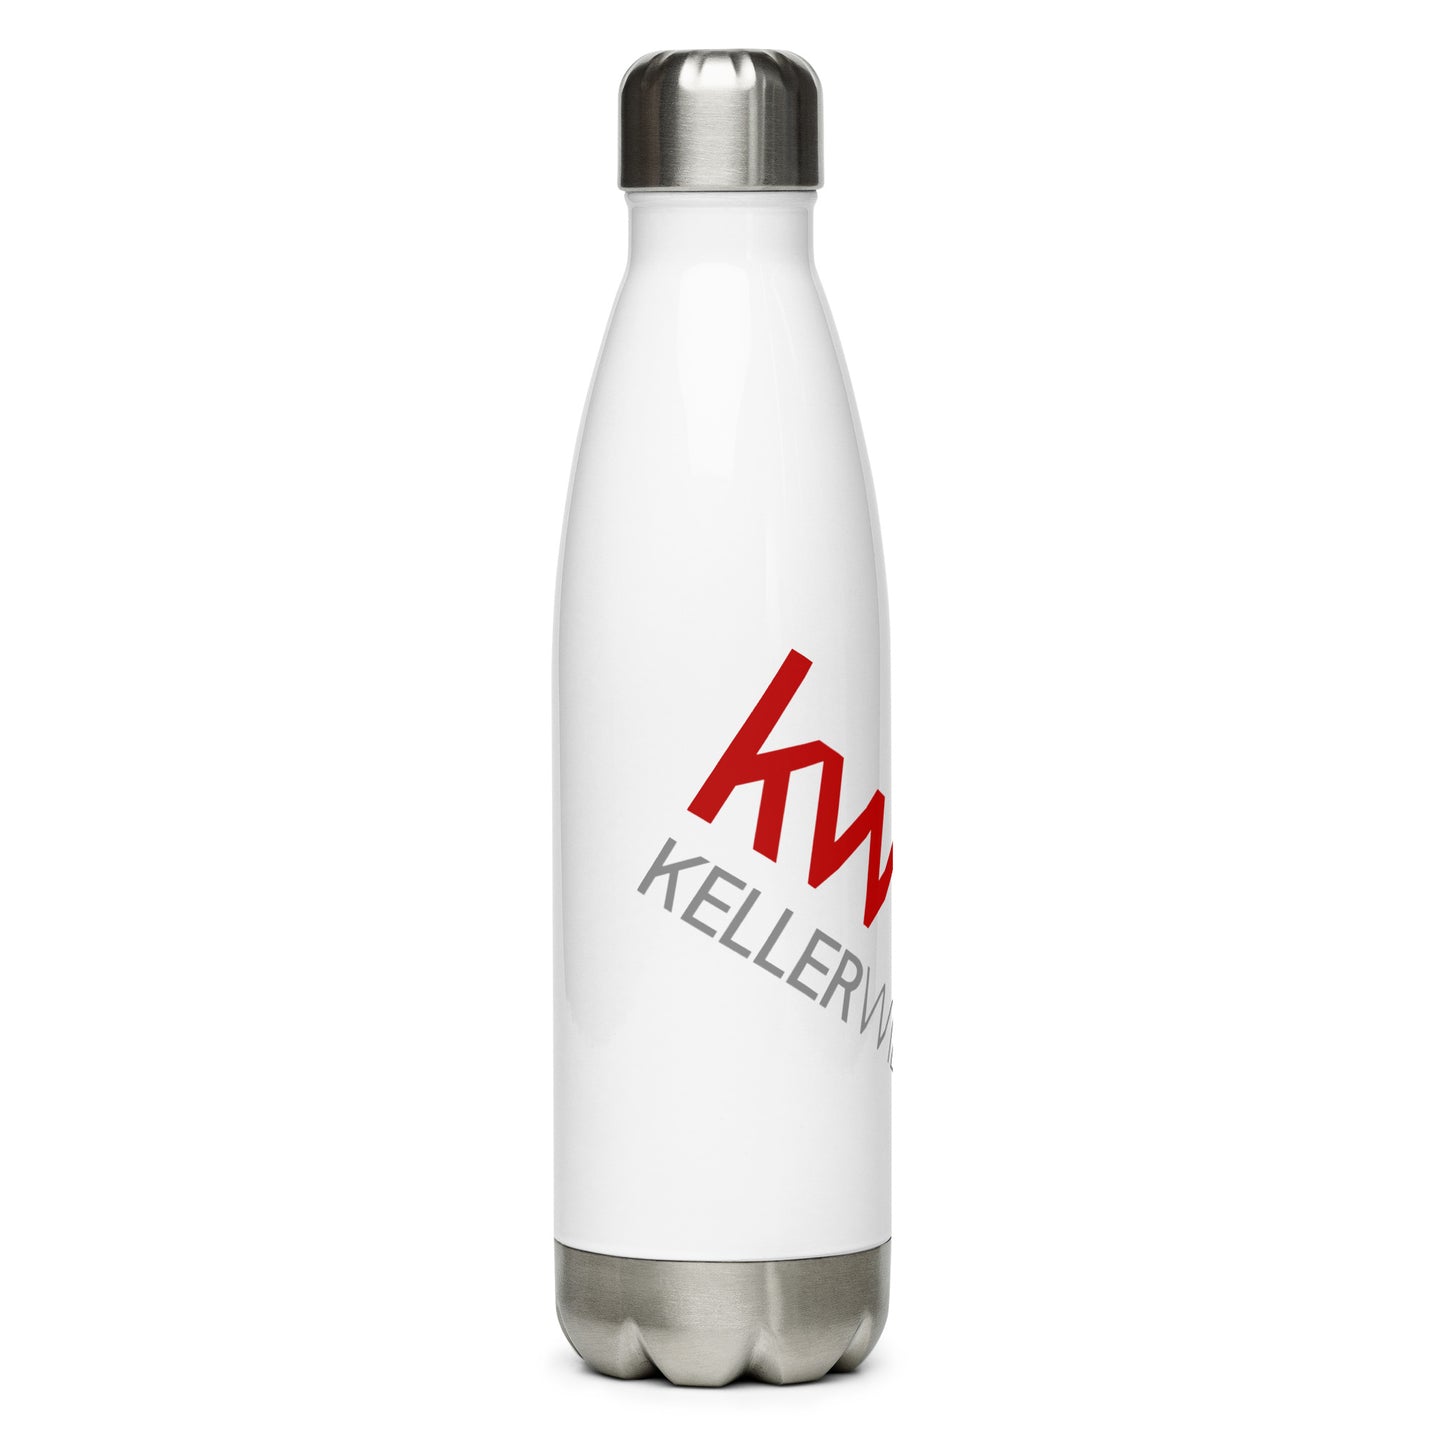 KW Stainless Steel Water Bottle